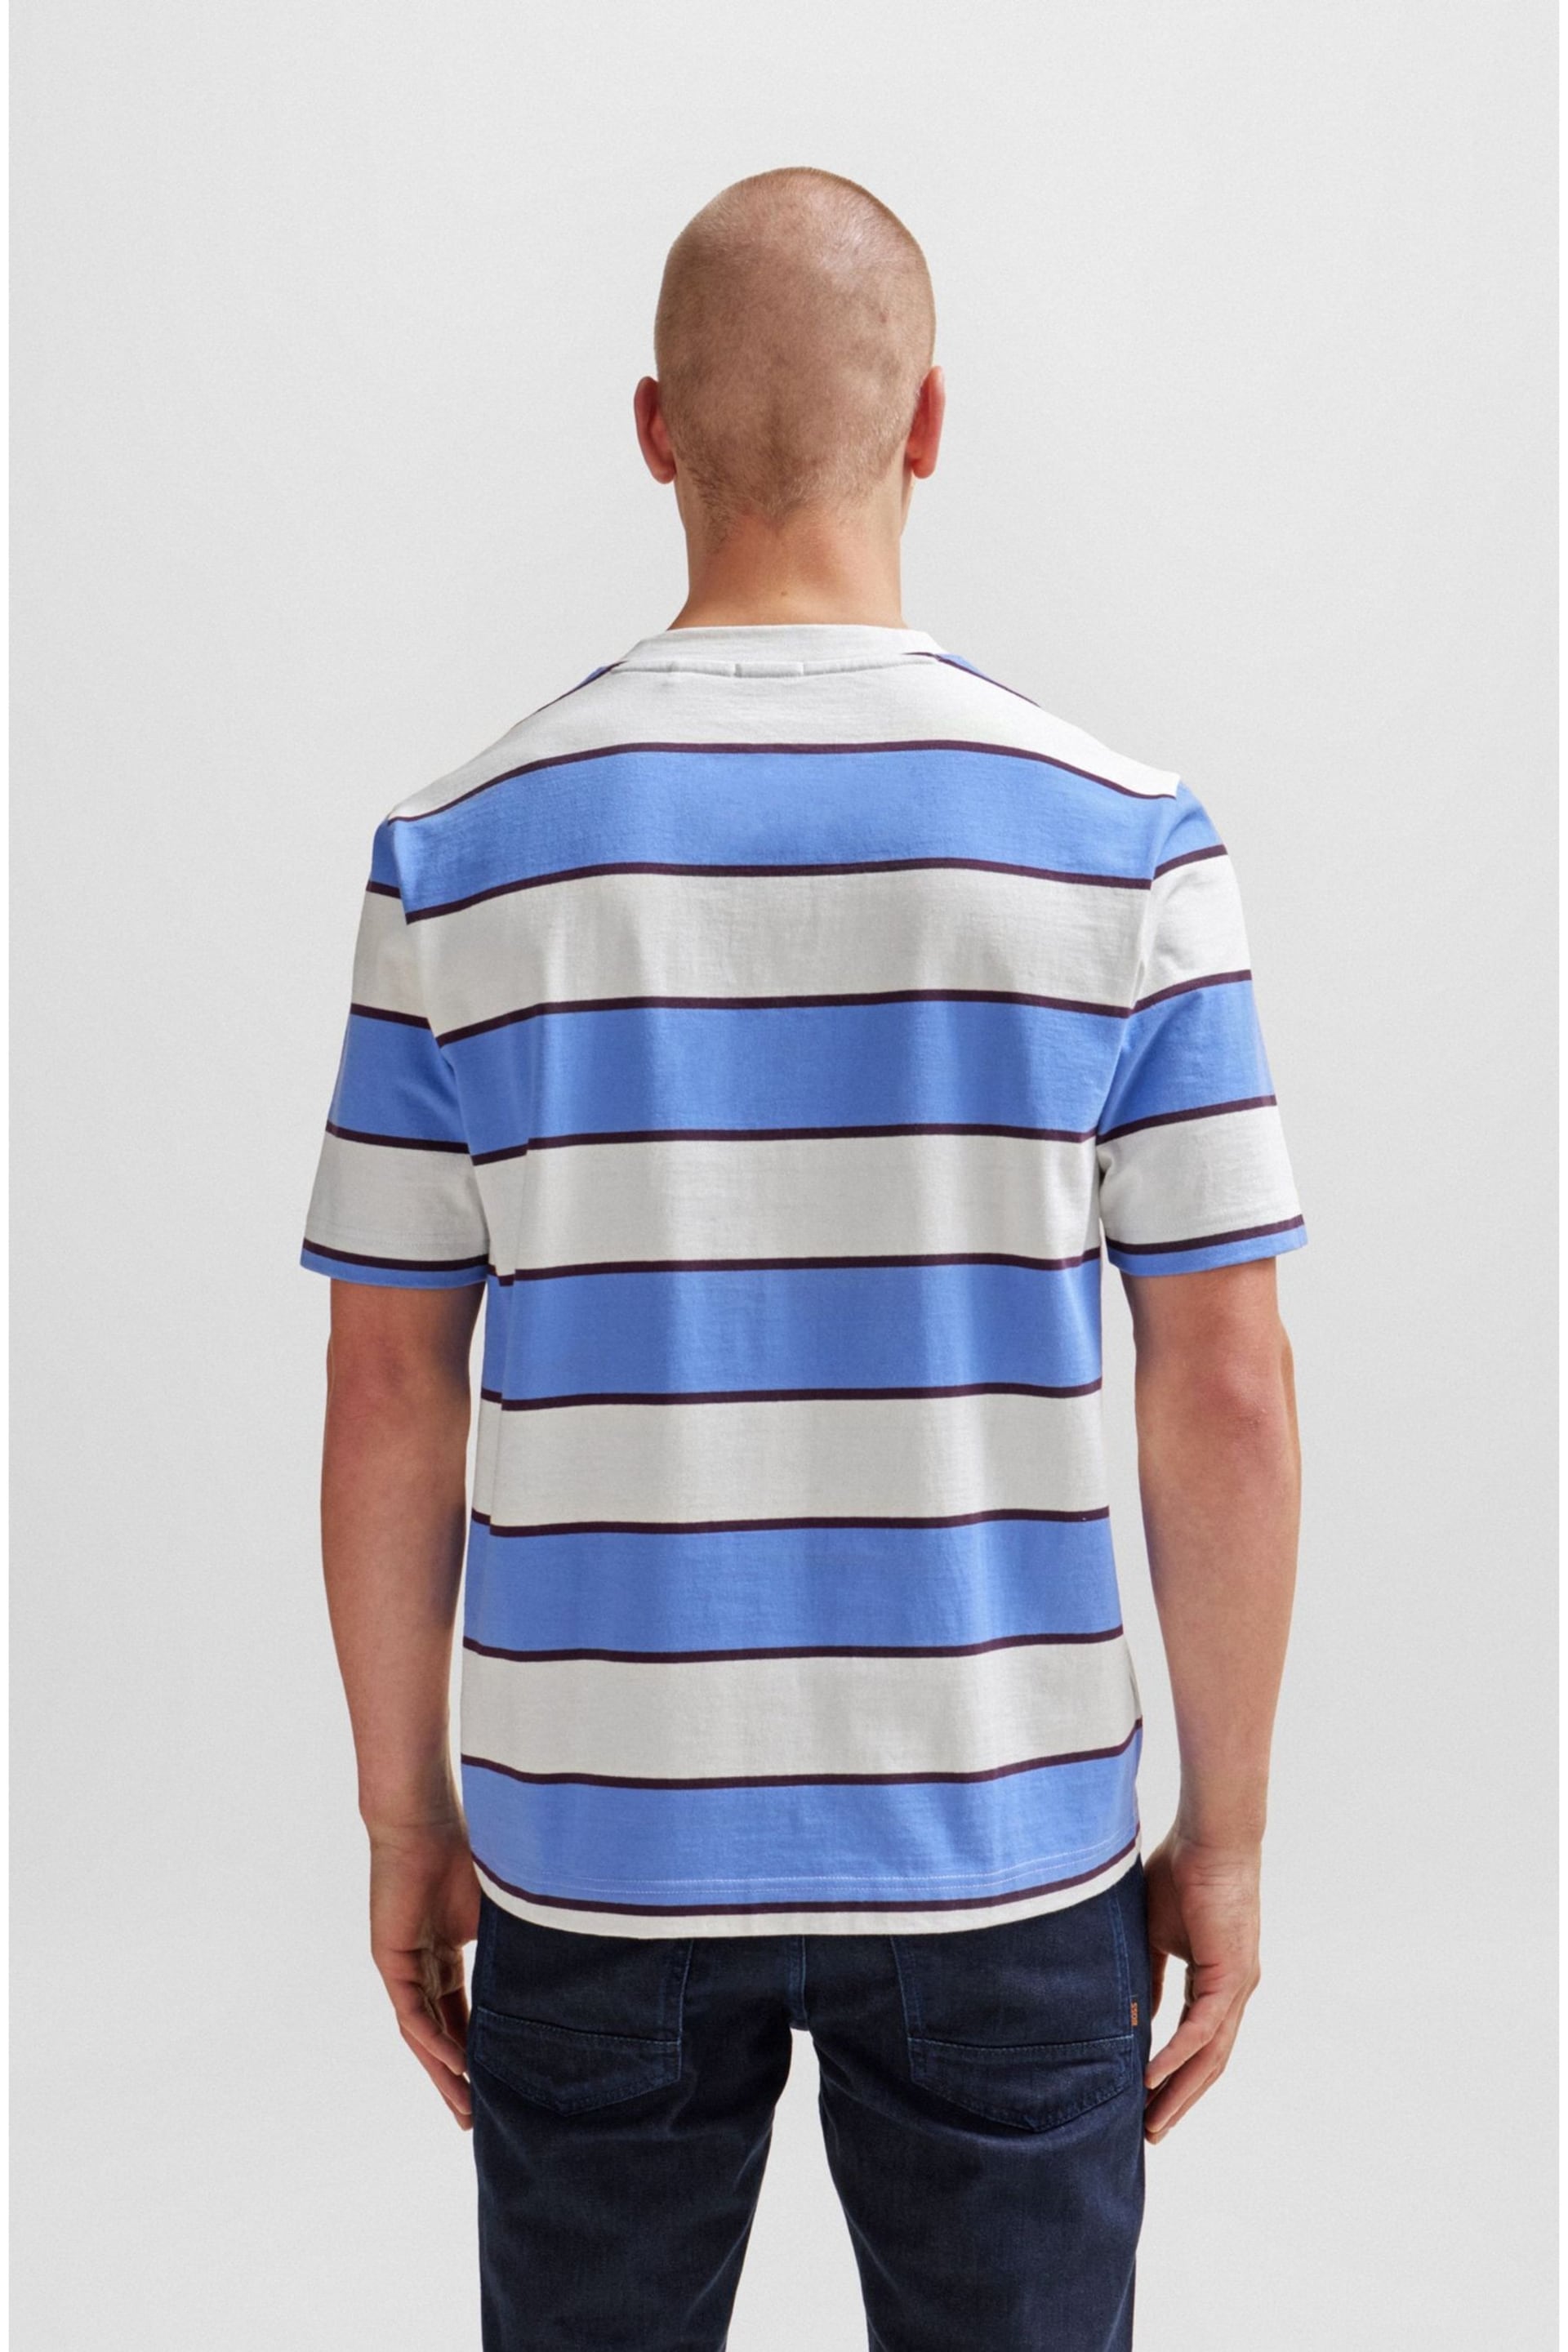 BOSS White/Purple Block Stripe Pocket T-Shirt - Image 3 of 6